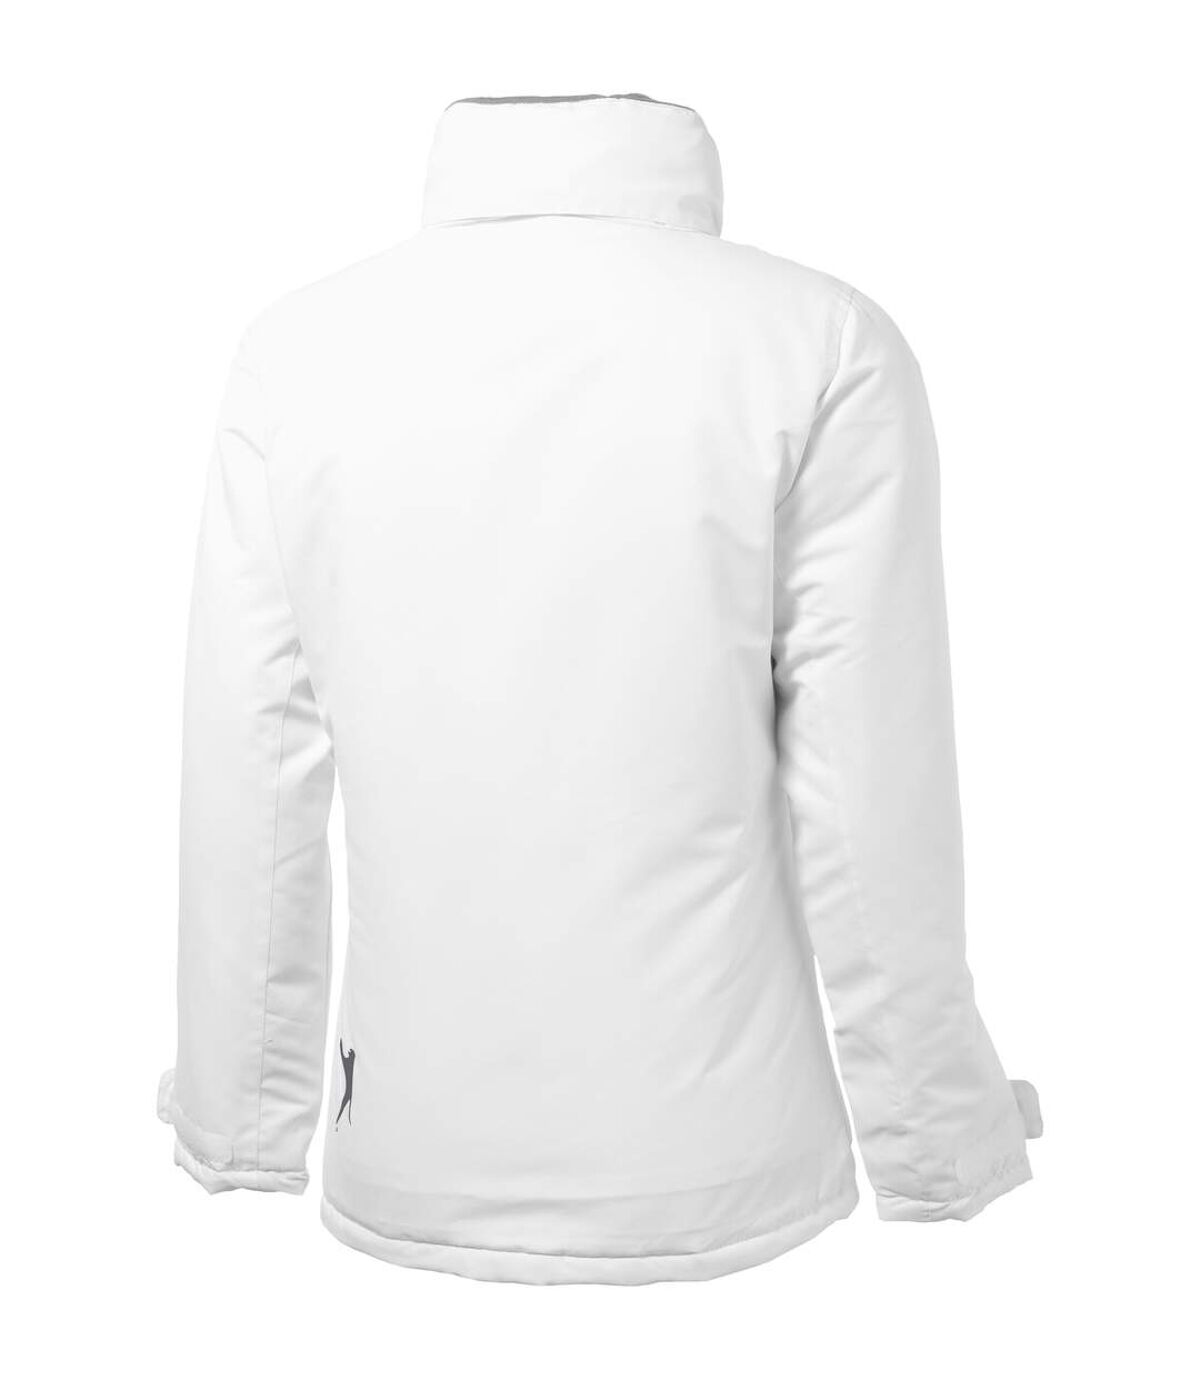 Slazenger Womens/Ladies Under Spin Insulated Jacket (White) - UTPF1784